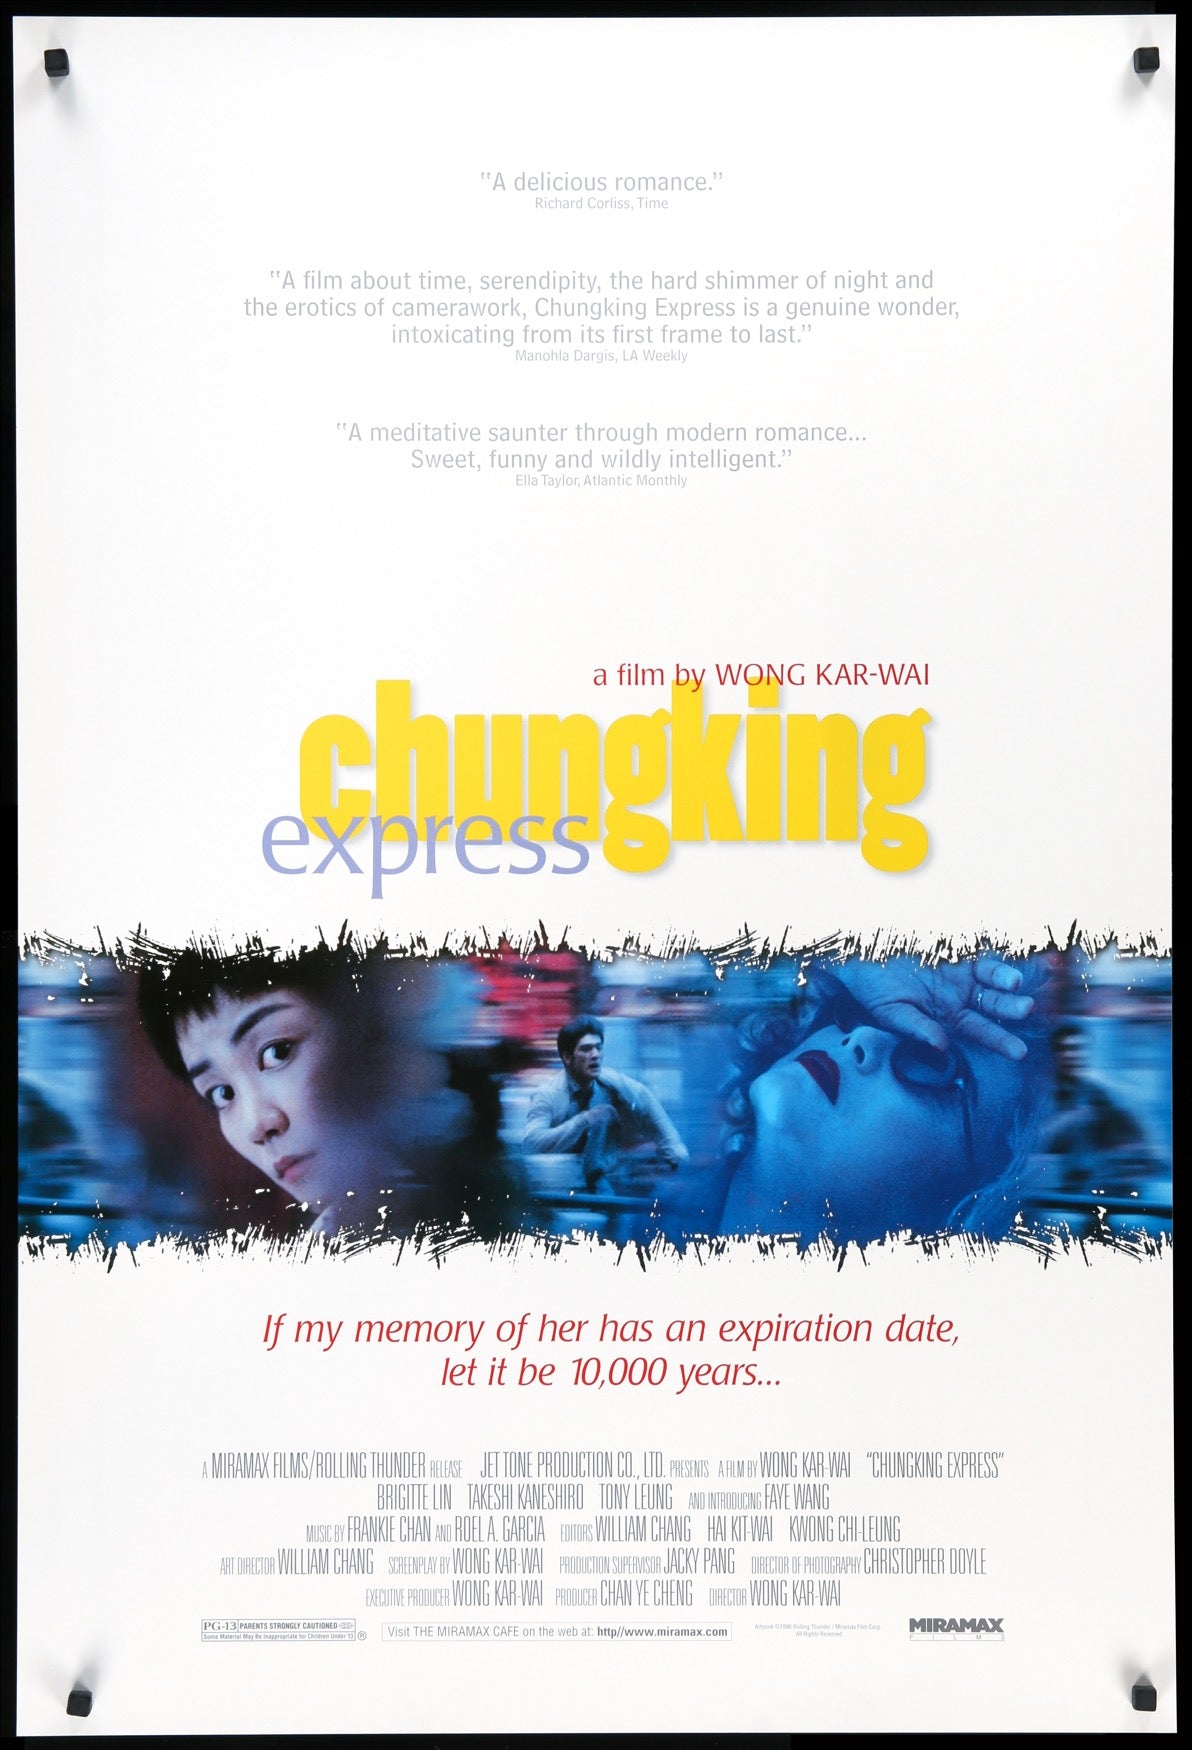 Chungking Express (1996) original movie poster for sale at Original Film Art